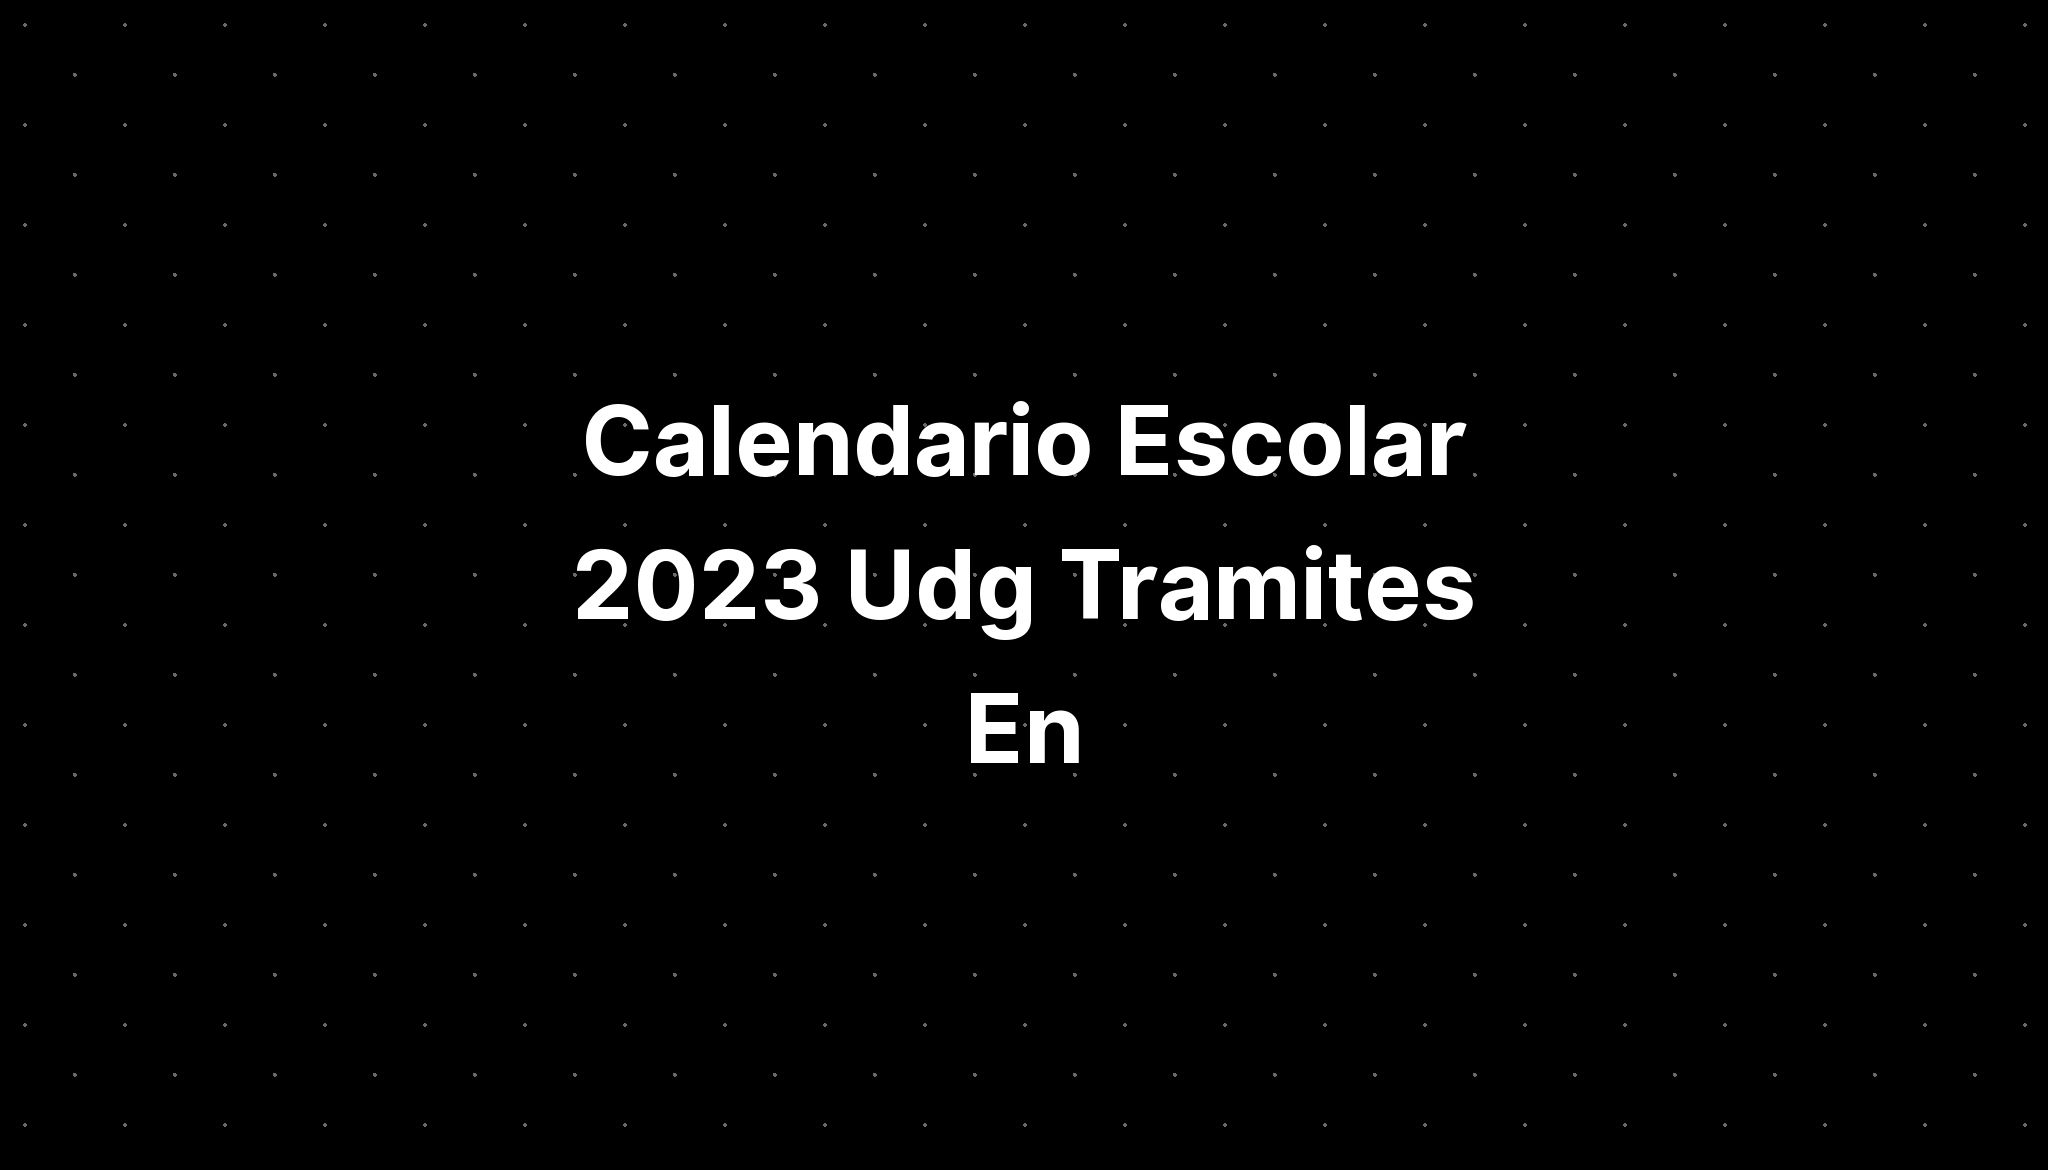 Calendario Escolar 2023 Udg Tramites En Imagesee 8890